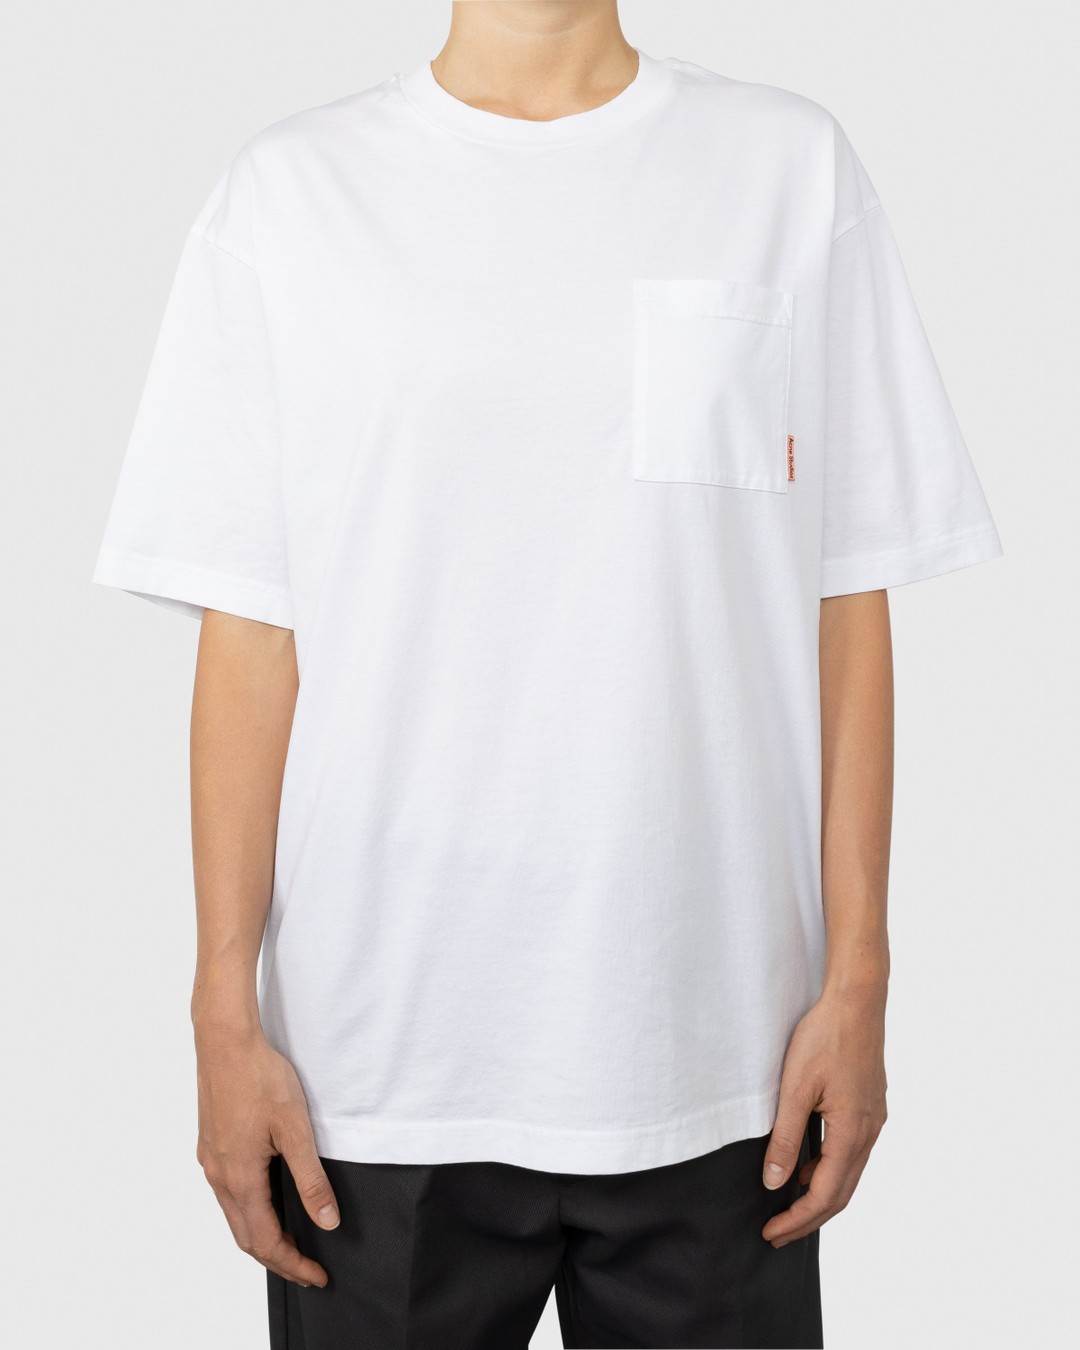 Acne Studios – Organic Cotton Pocket T-Shirt White - T-Shirts - White - Image 2